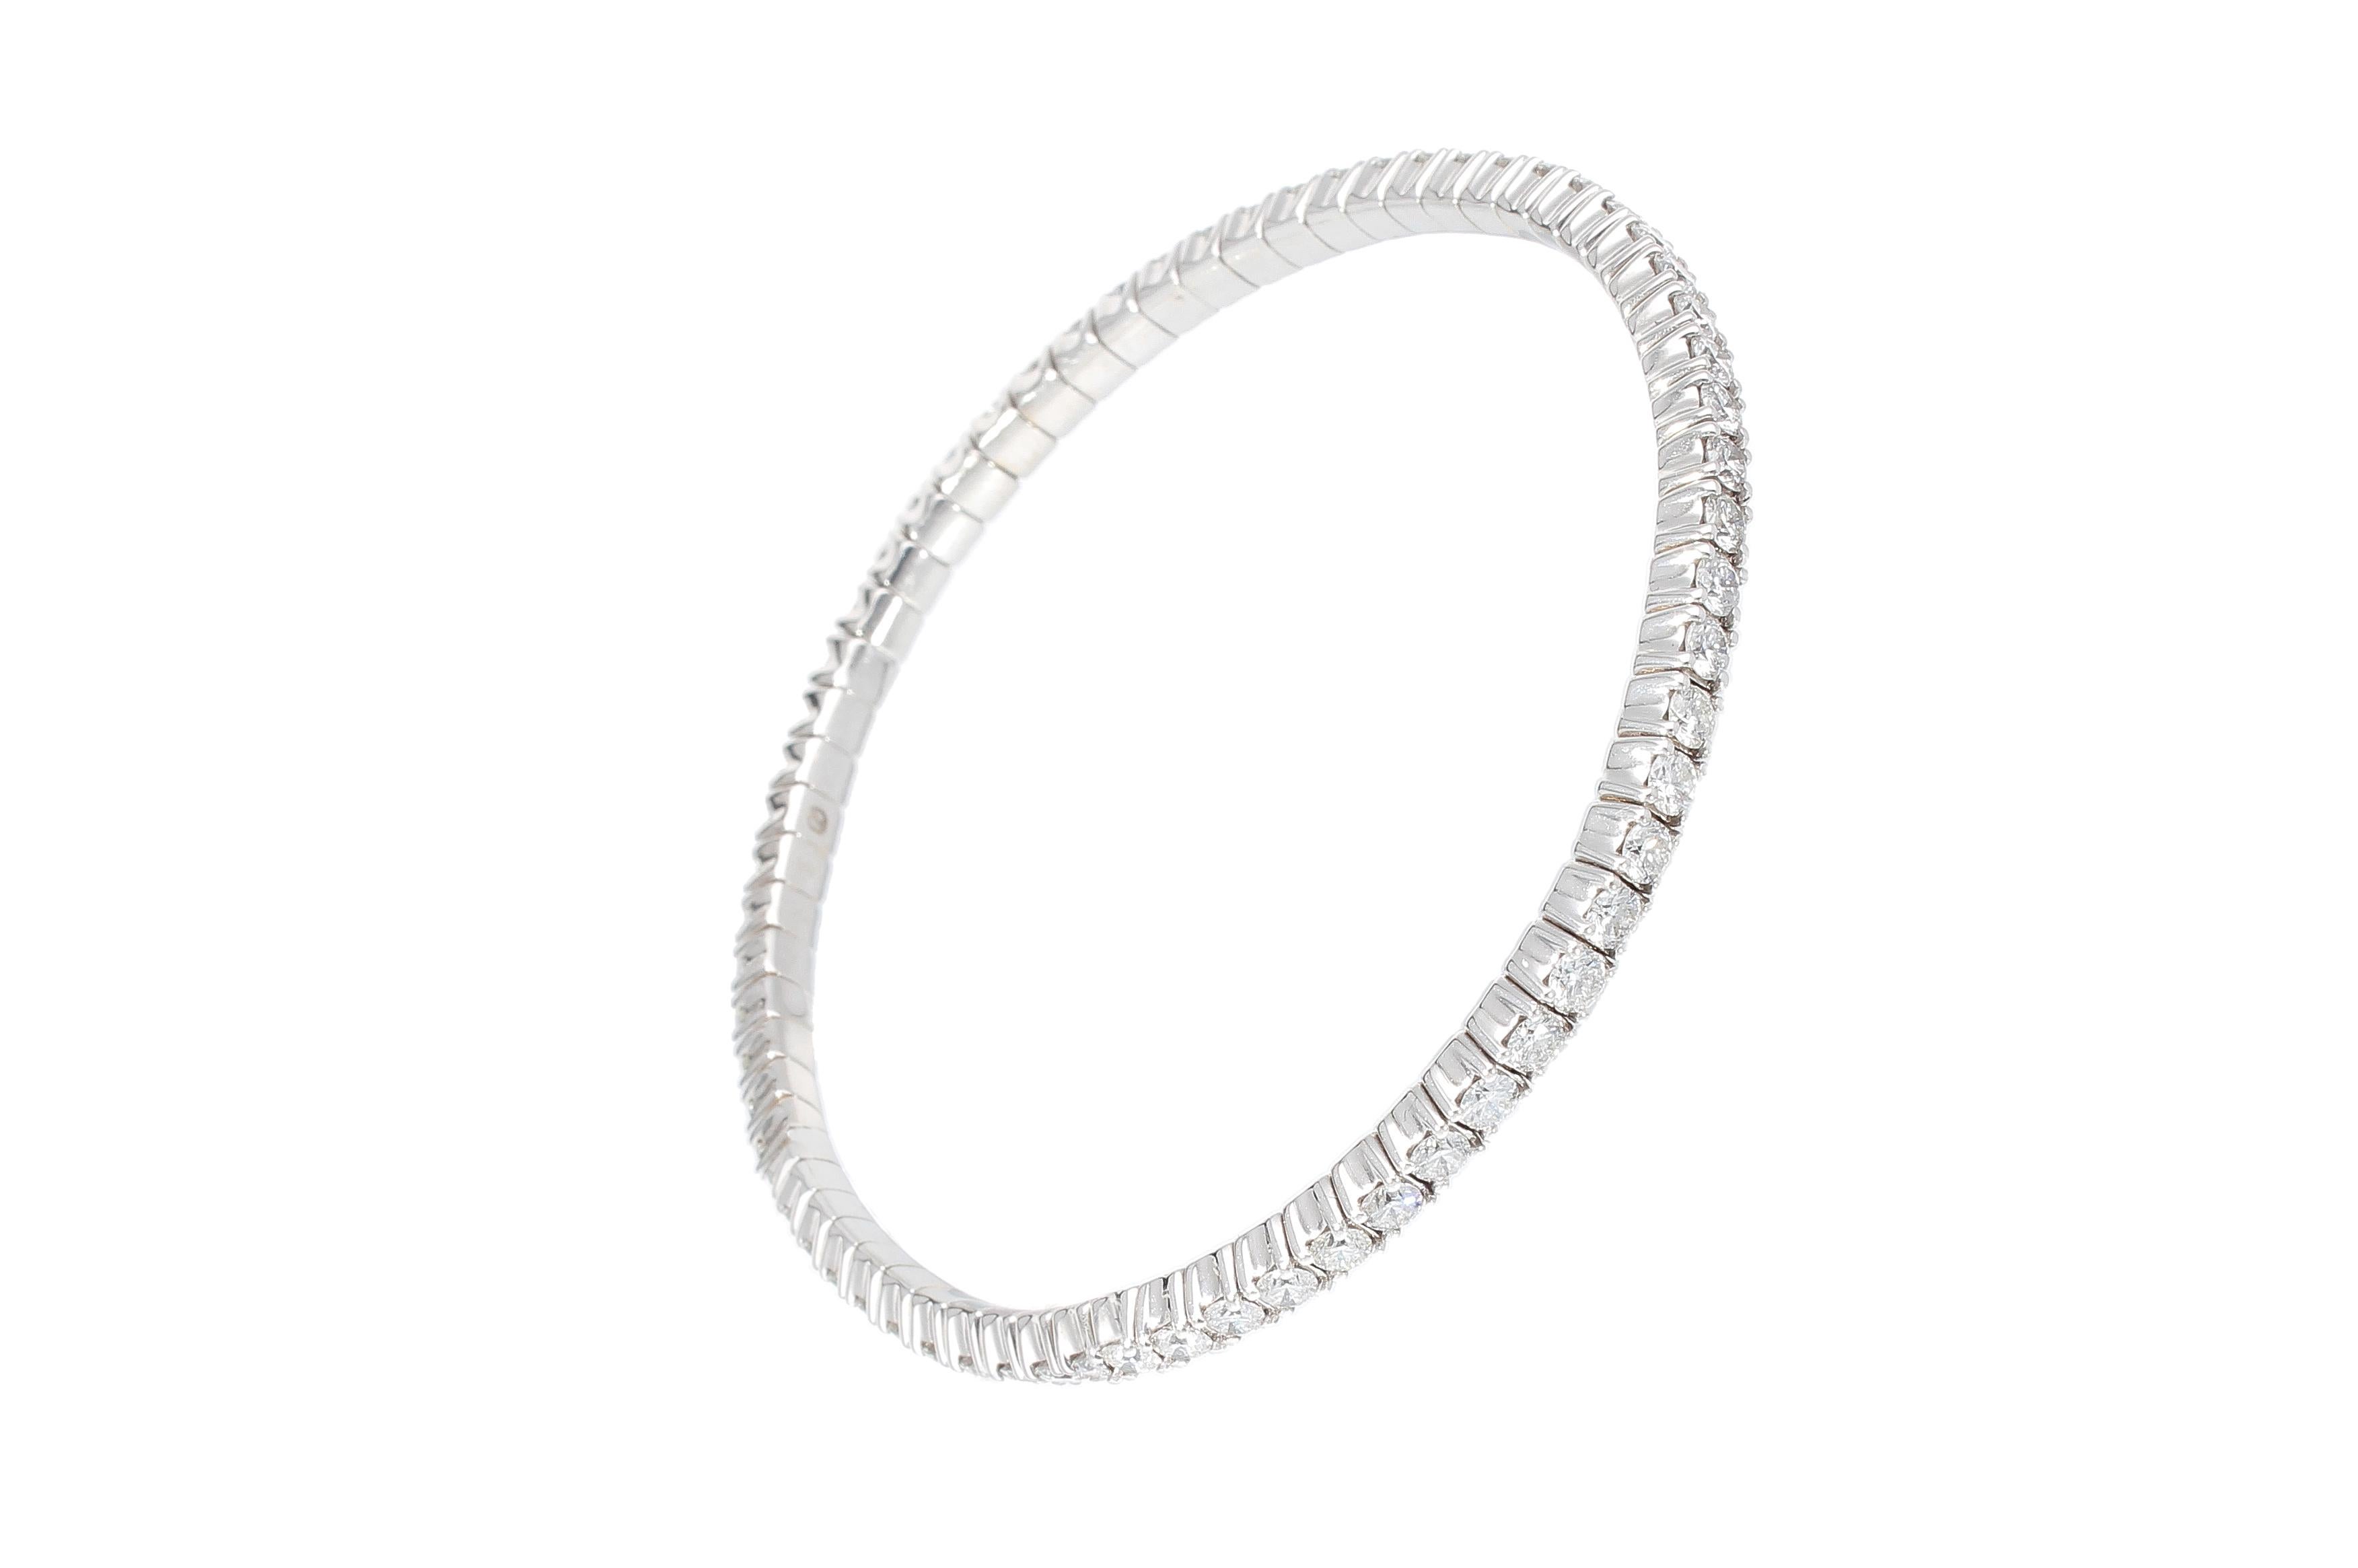 Brilliant Cut Carat 4.08 Elastic Diamond Tennis Bracelet. White Gold 18 Kt. Made in Italy. For Sale